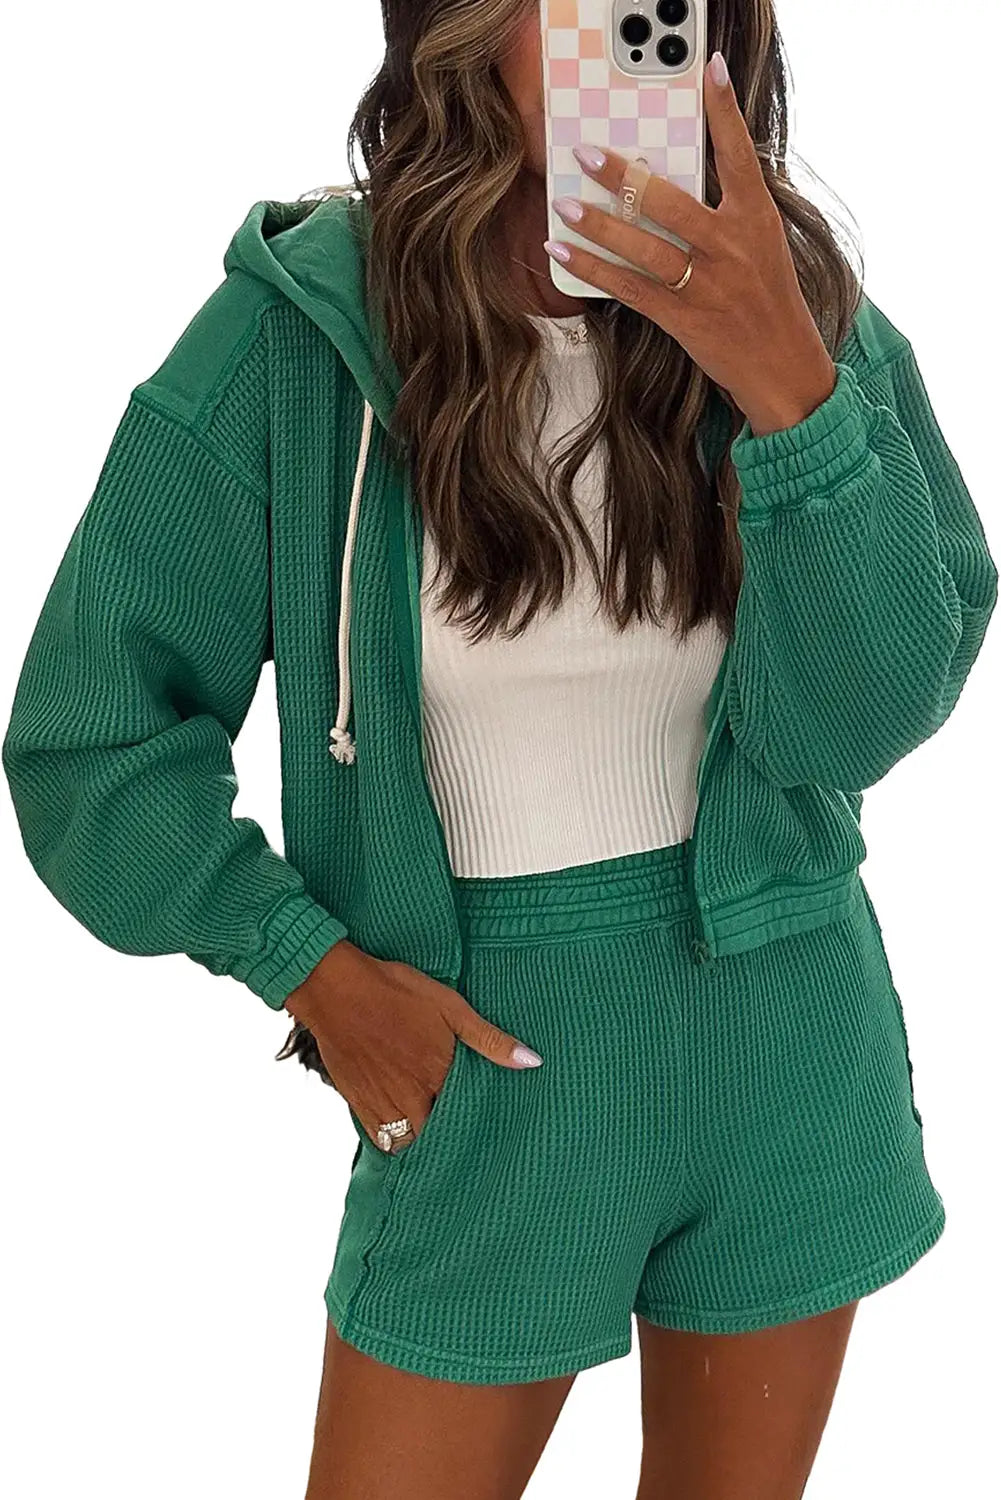 Blackish green waffle knit hooded jacket and shorts outfit - sets